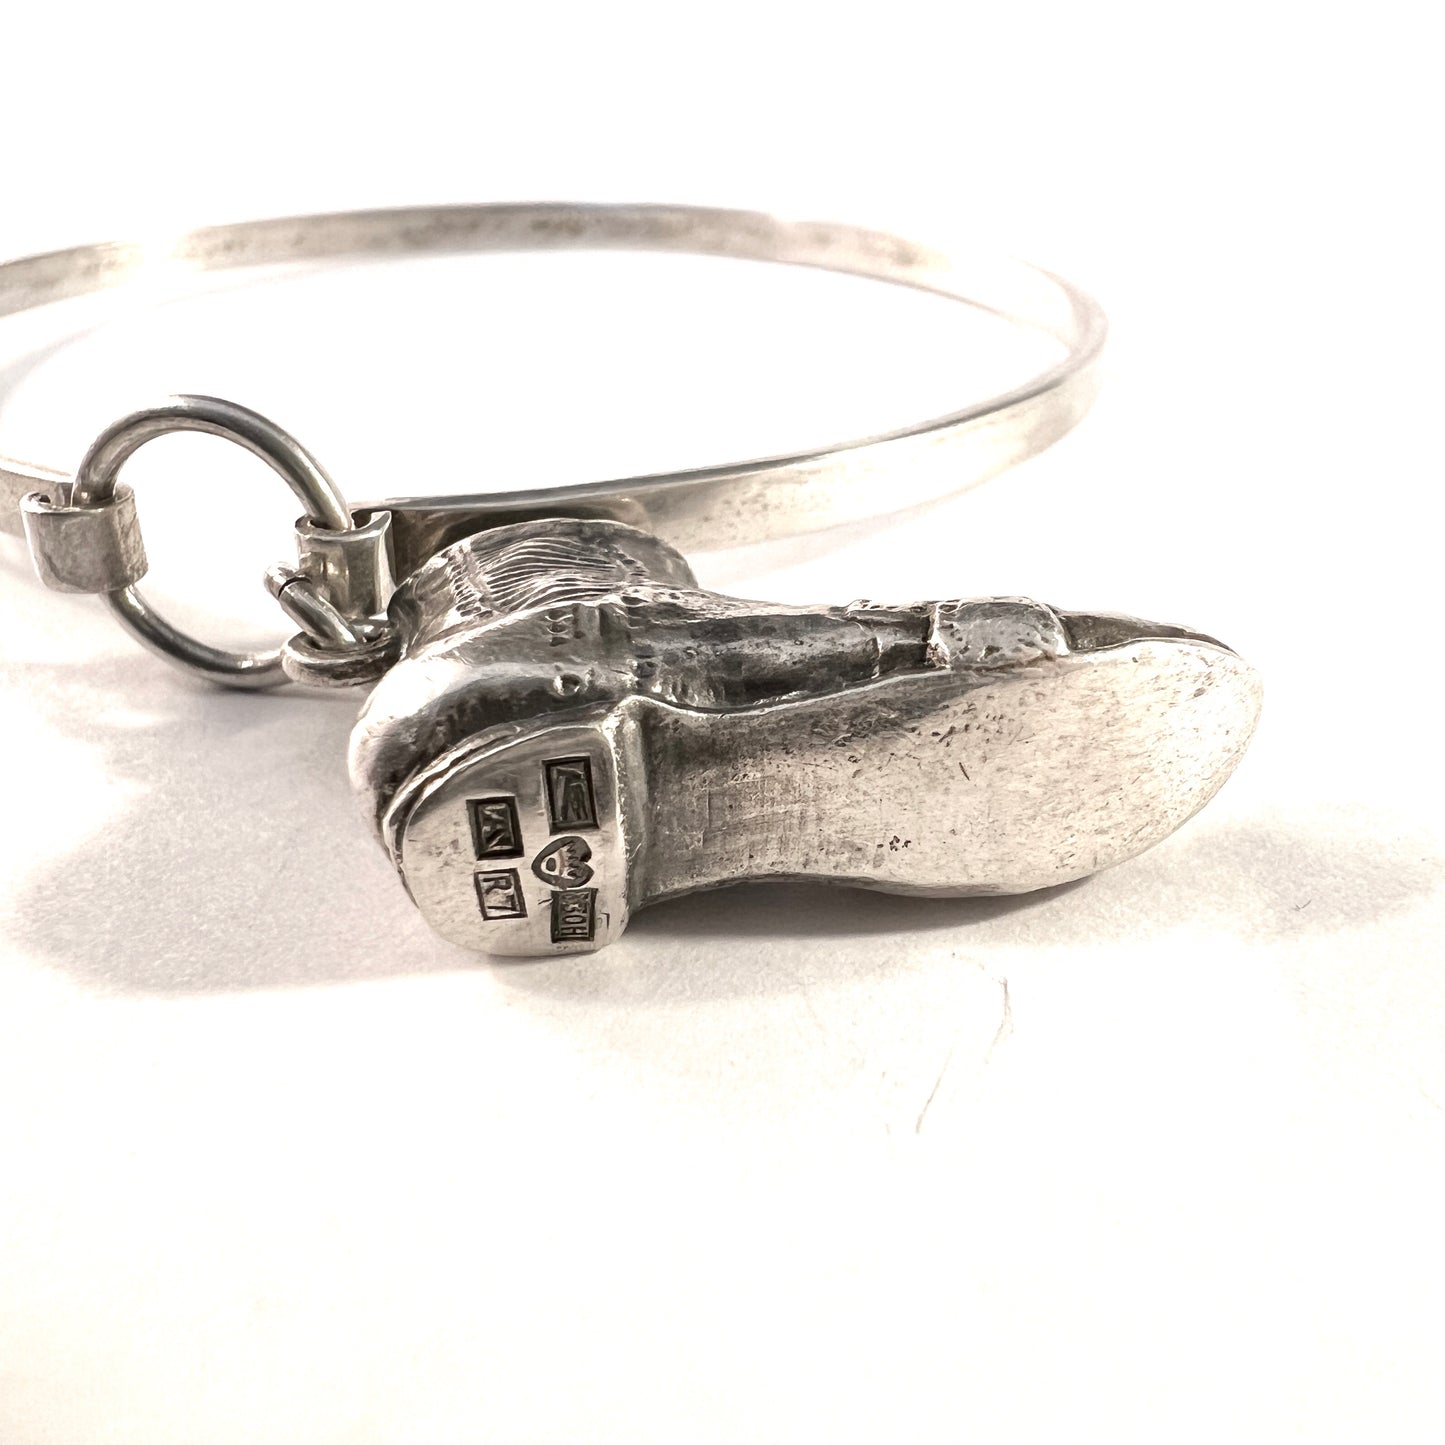 Kultakeskus Oy, Finland 1970. Solid Silver Bangle Shoe Charm Bracelet.